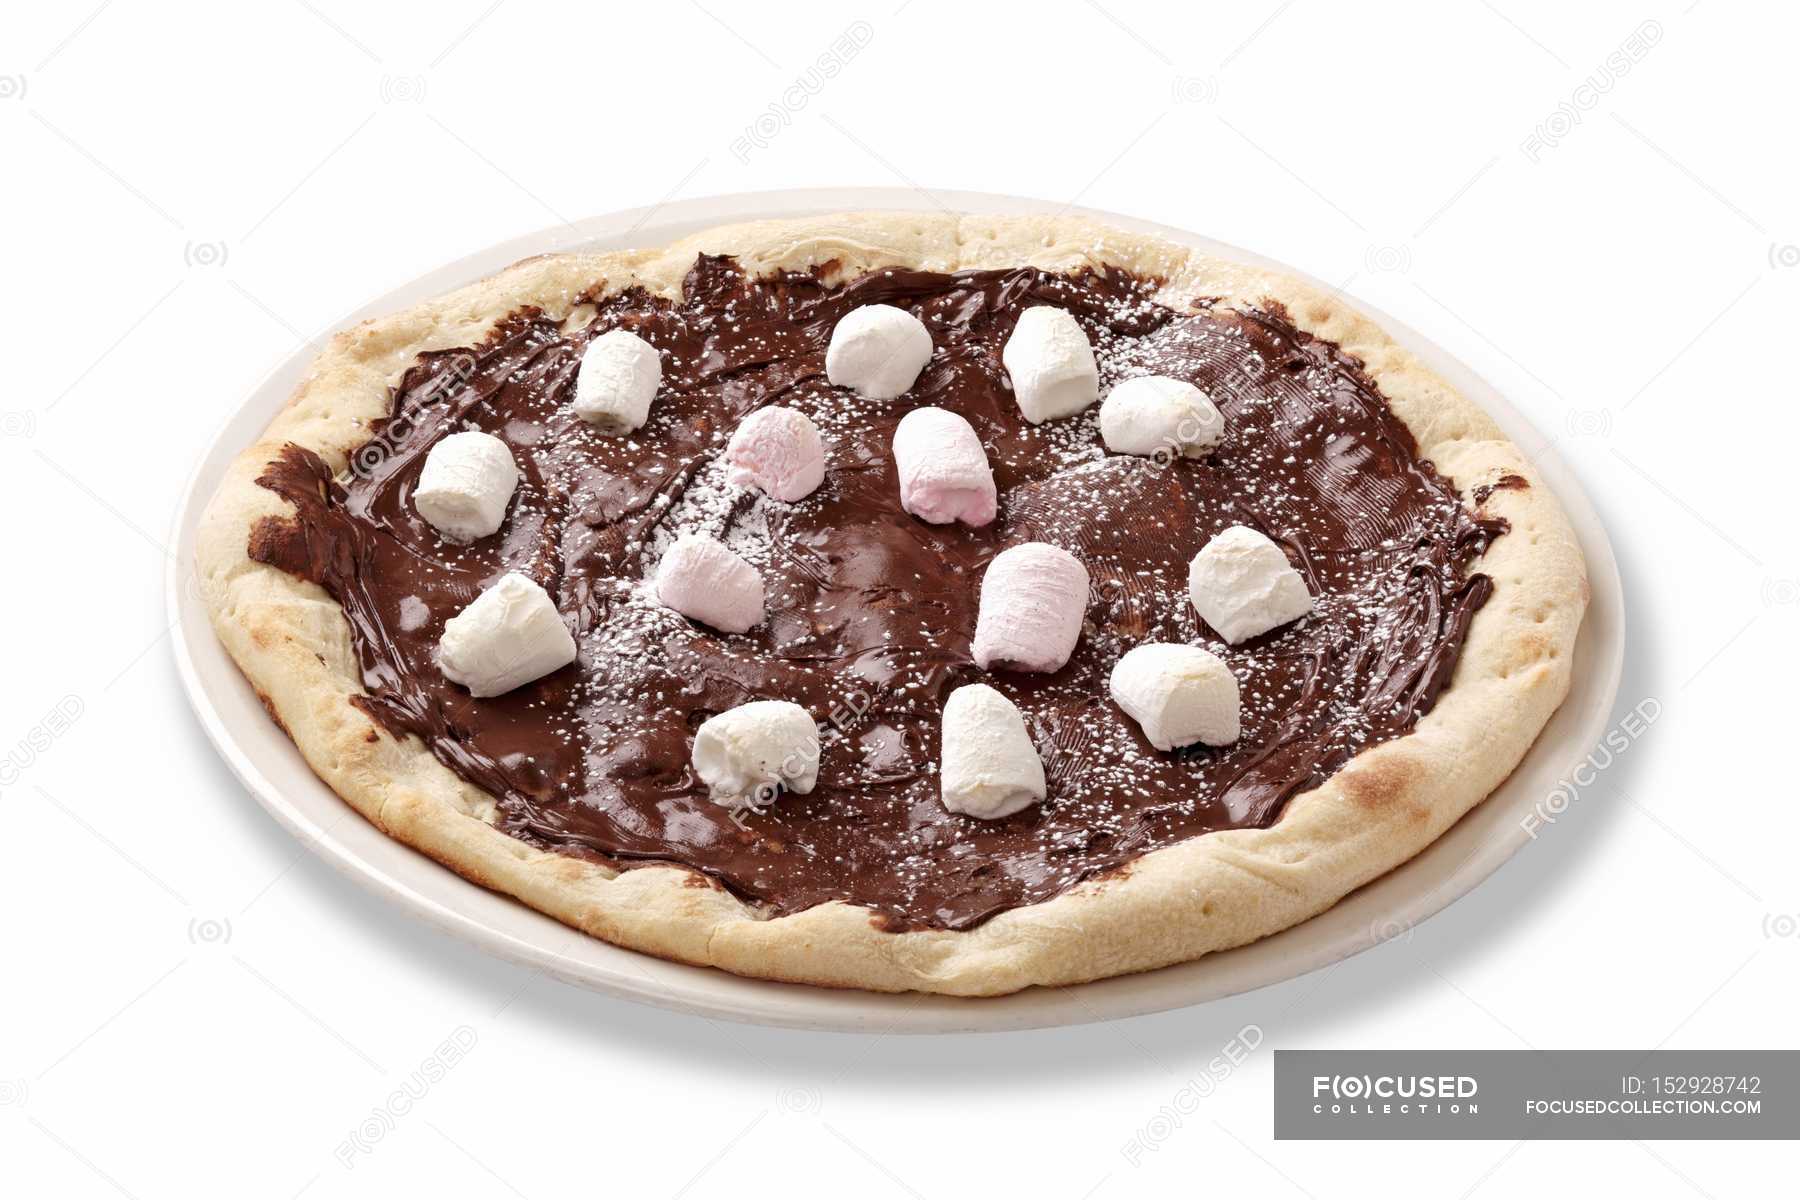 шоколадная пицца рецепт с маршмеллоу фото 17